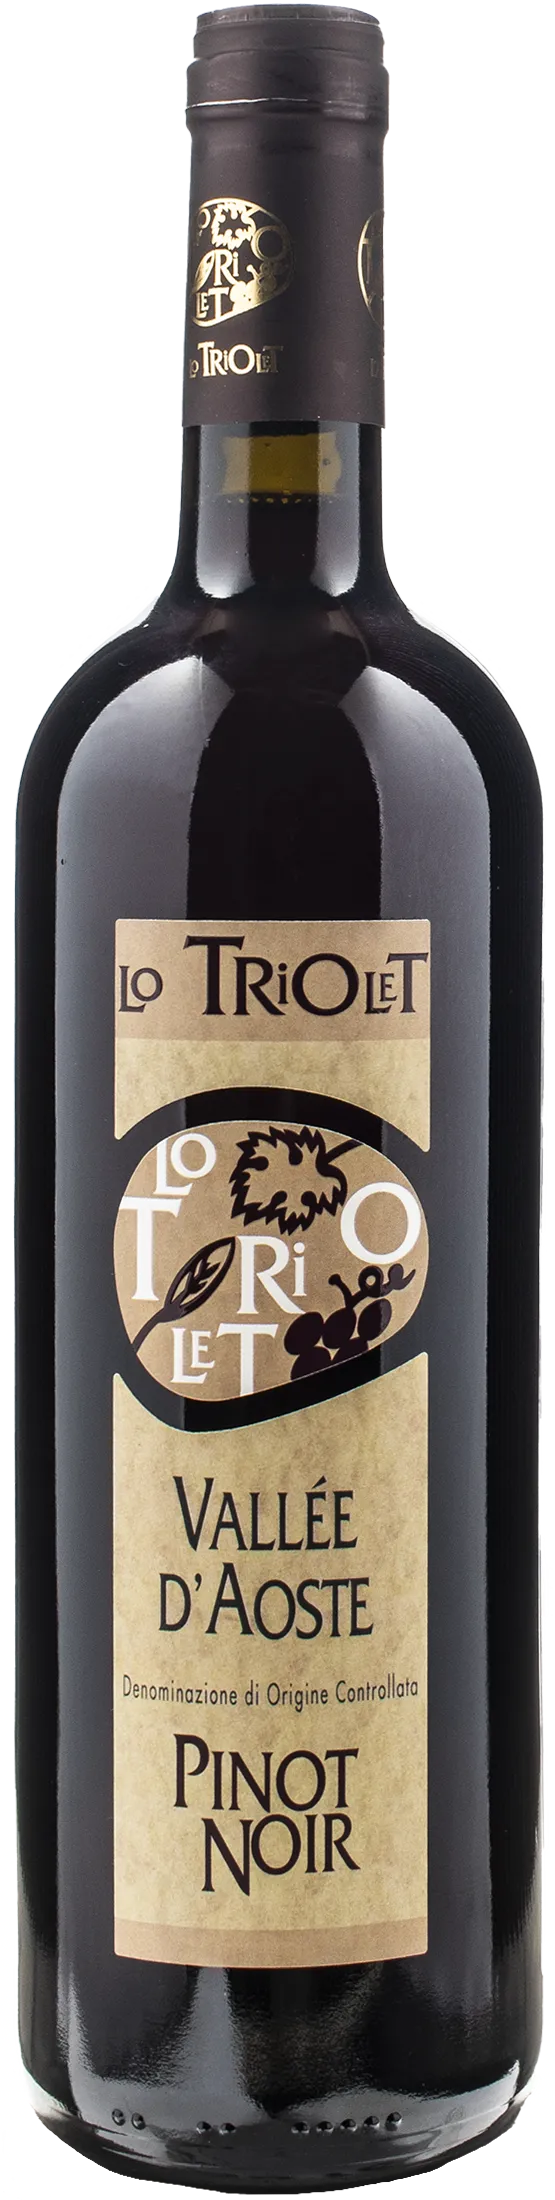 Lo Triolet Pinot Noir